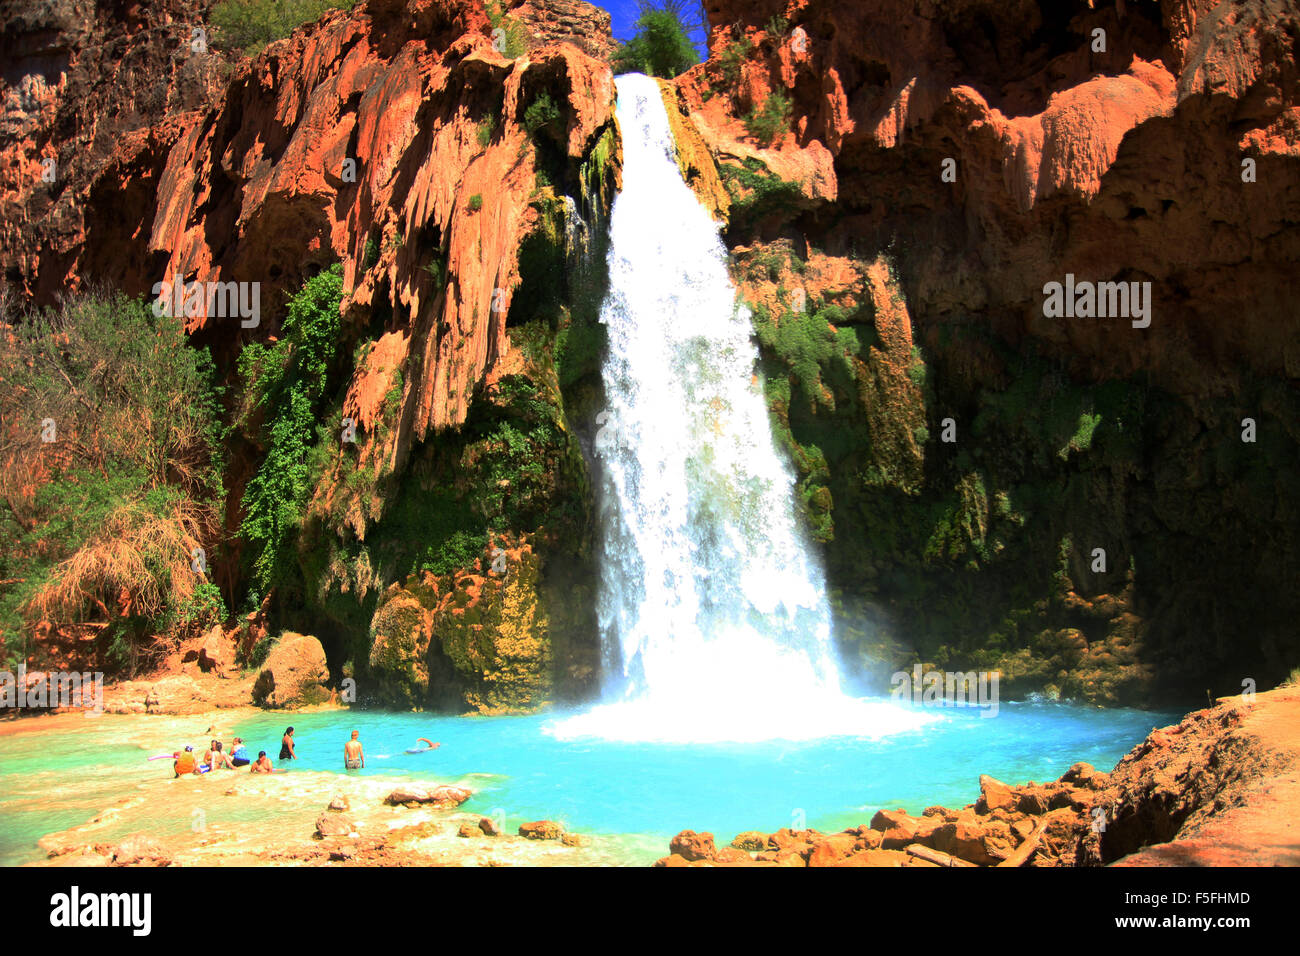 Majestic waterfalls and beautiful scenery on the Havasupai Indian reservation in the Grand Canyon, Arizona, USA Stock Photo